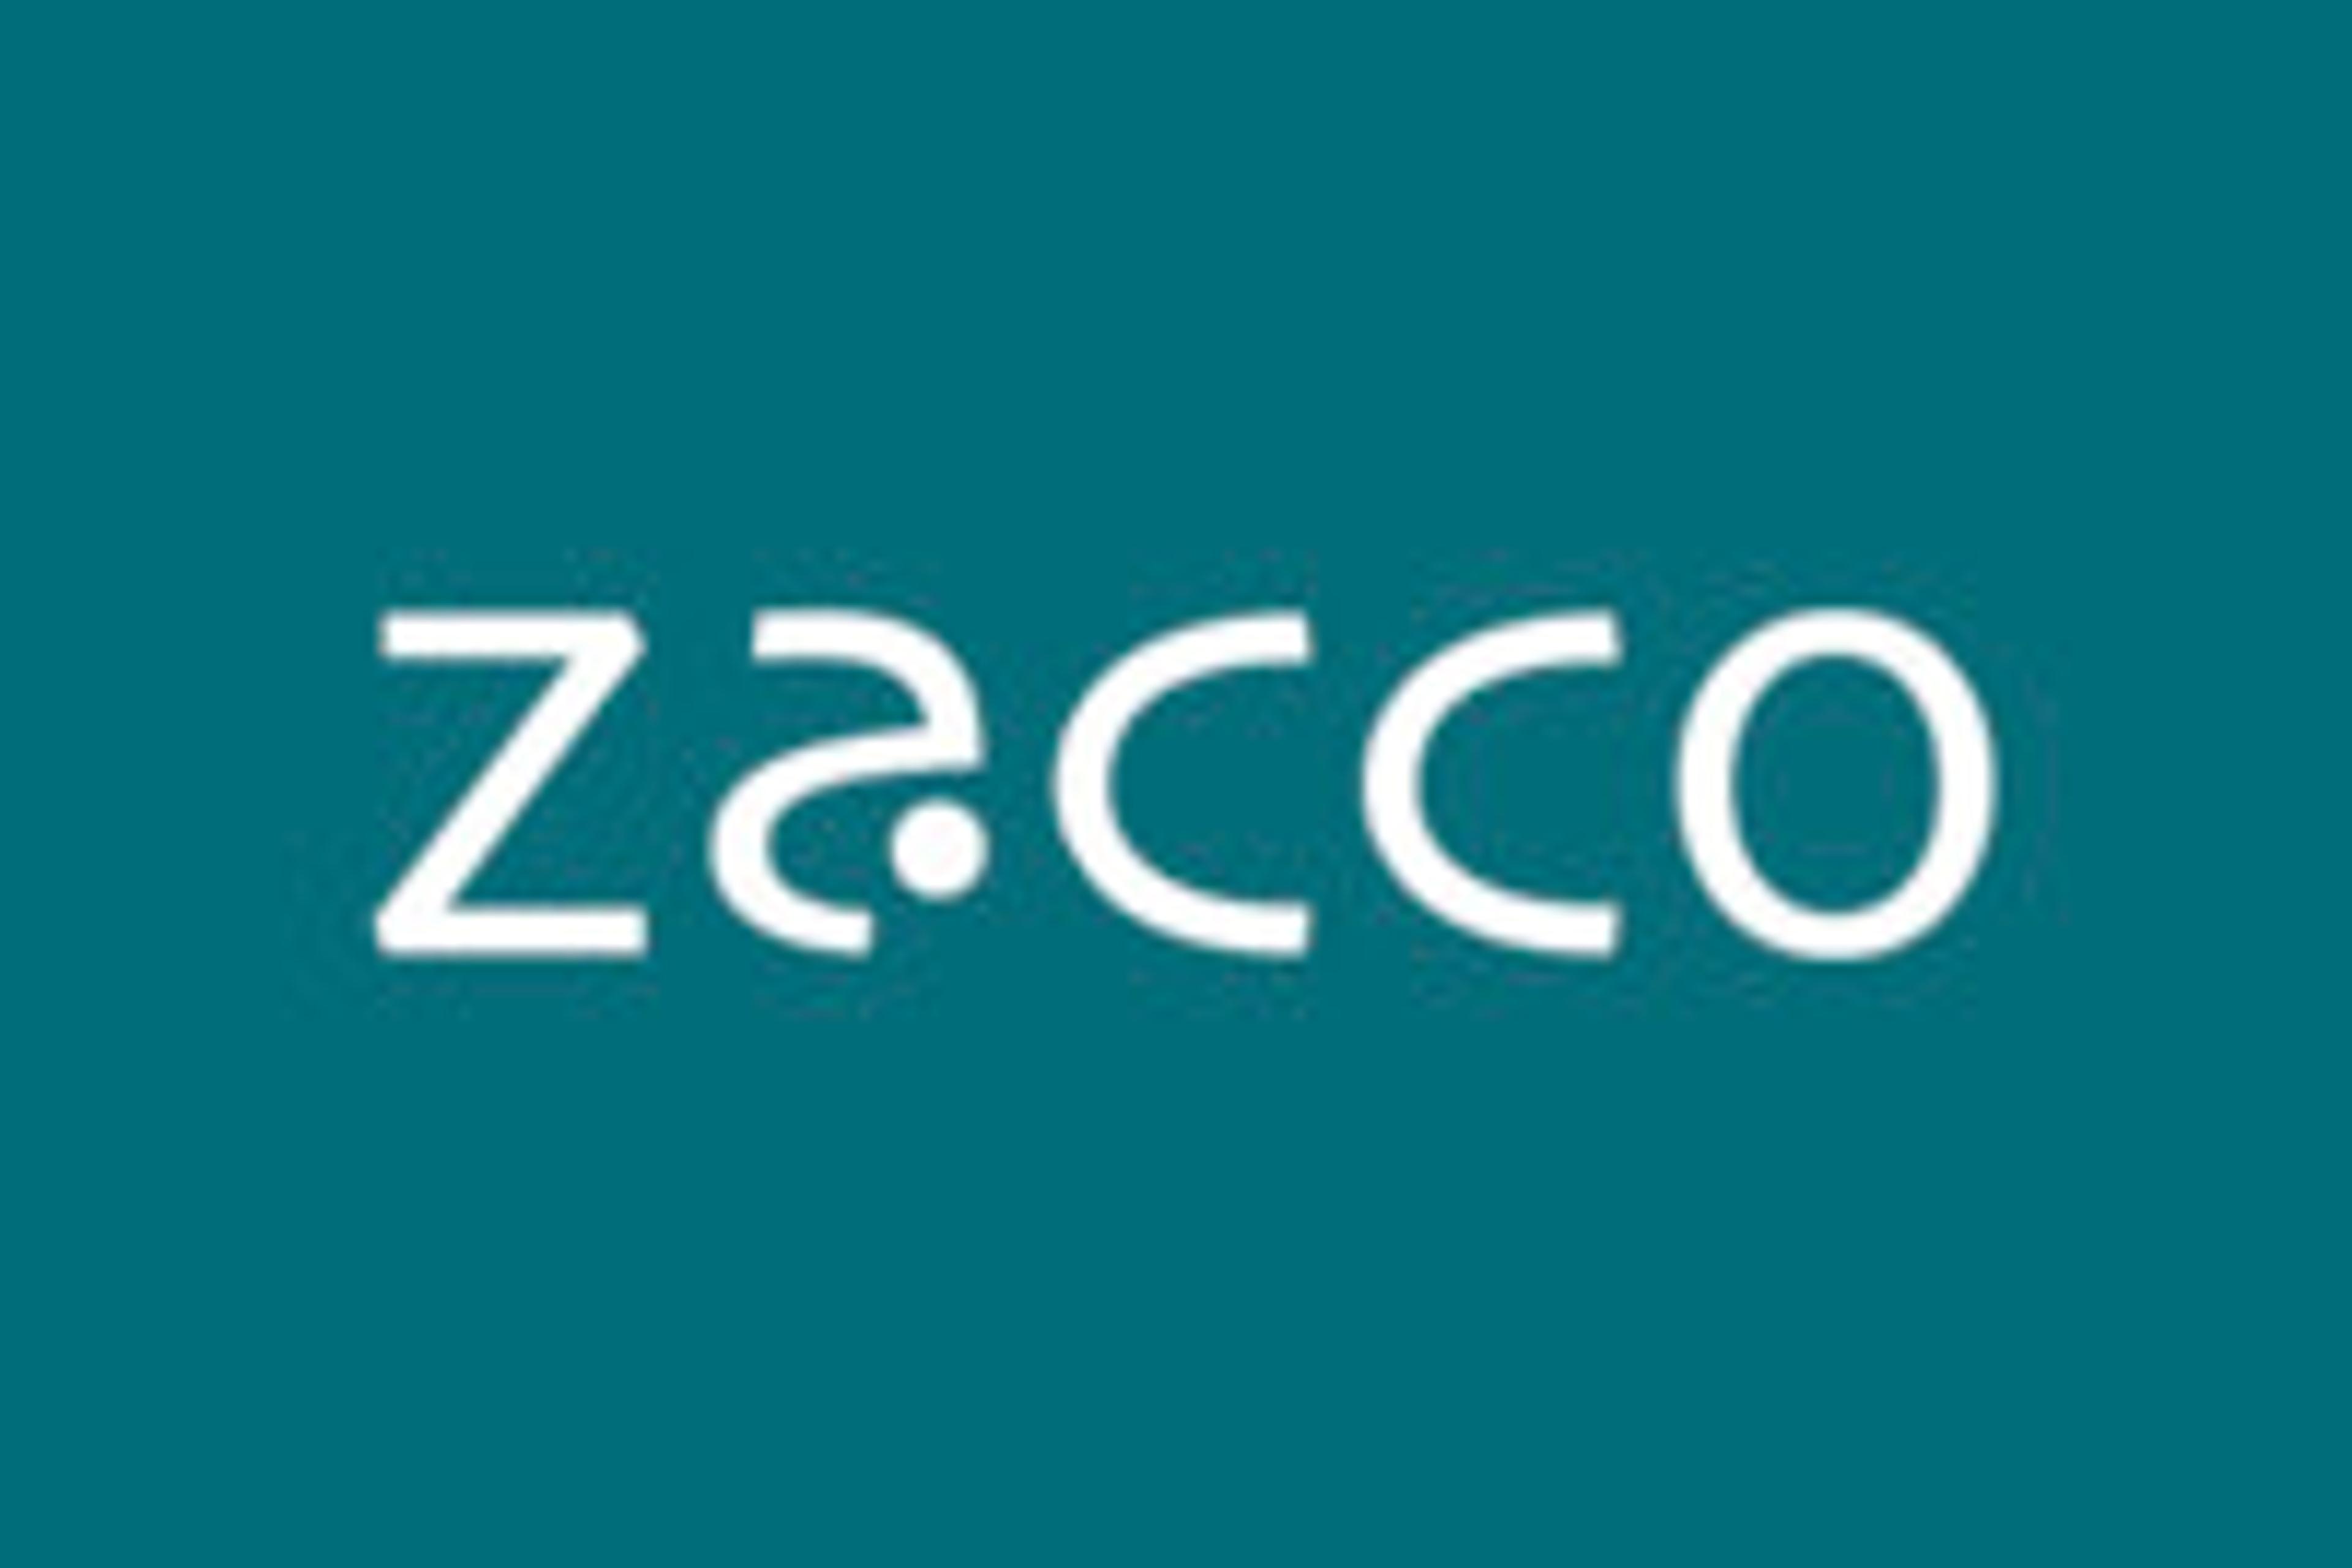 Zacco logo